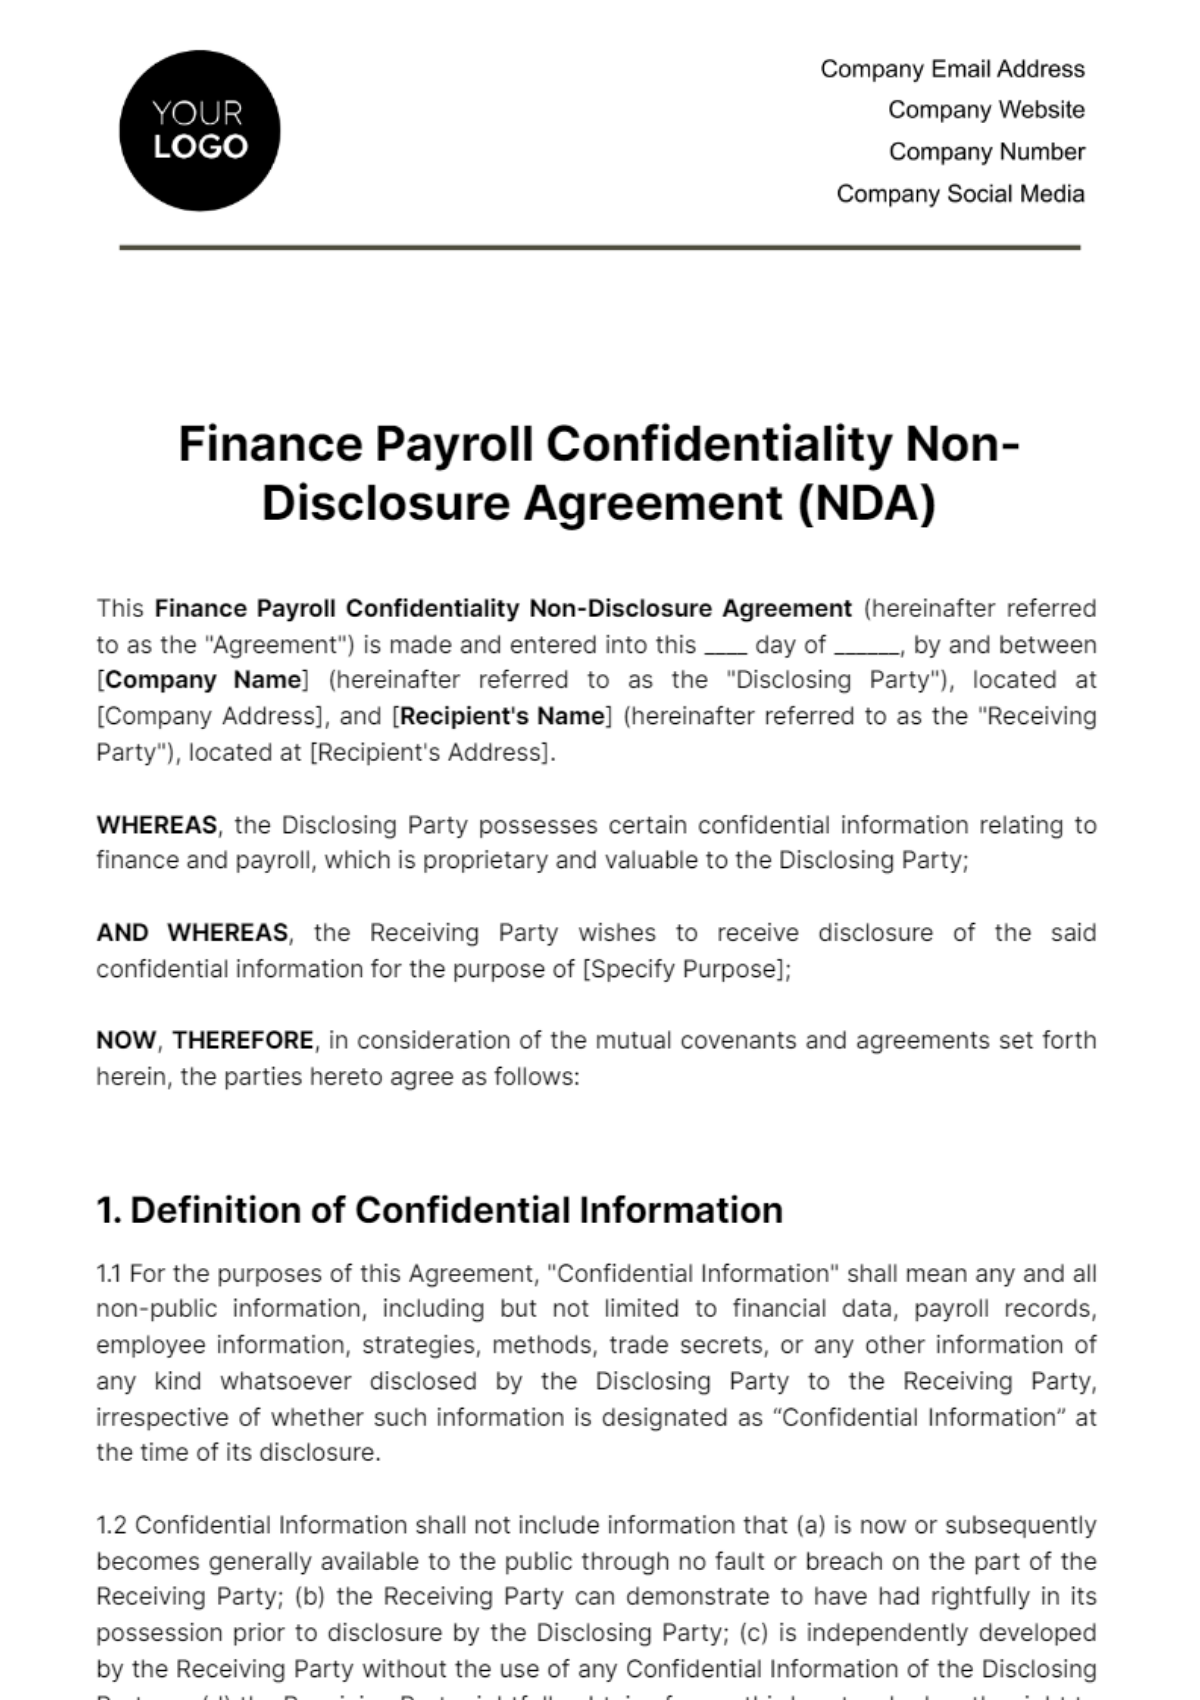 Finance Payroll Confidentiality NDA Template